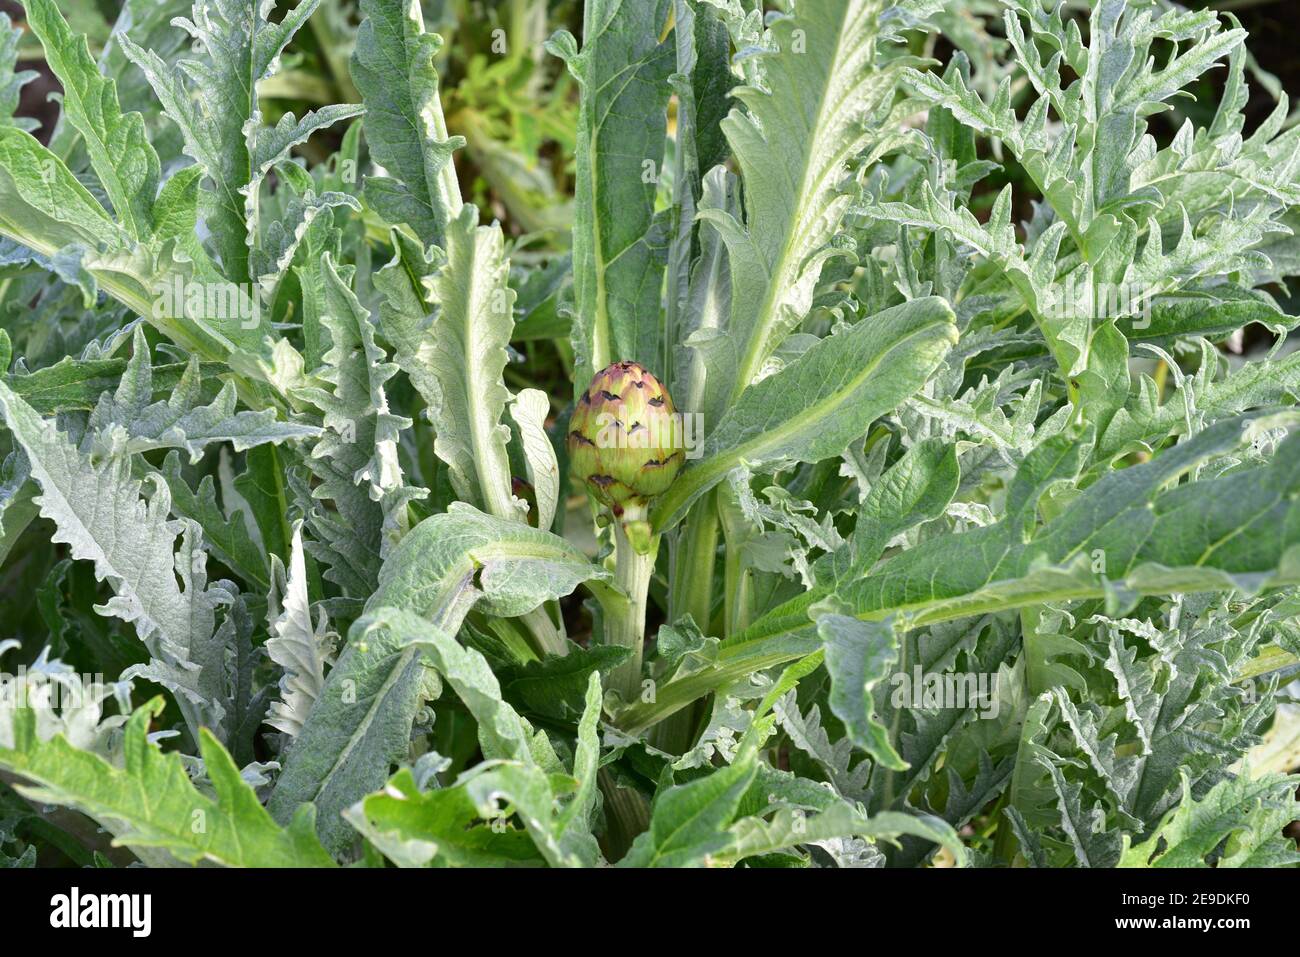 Globe artichoke (Cynara scolymus or Cynara cardunculus scolymus) is a edible perennial herb native to Mediterranean region. This photo was taken in Stock Photo